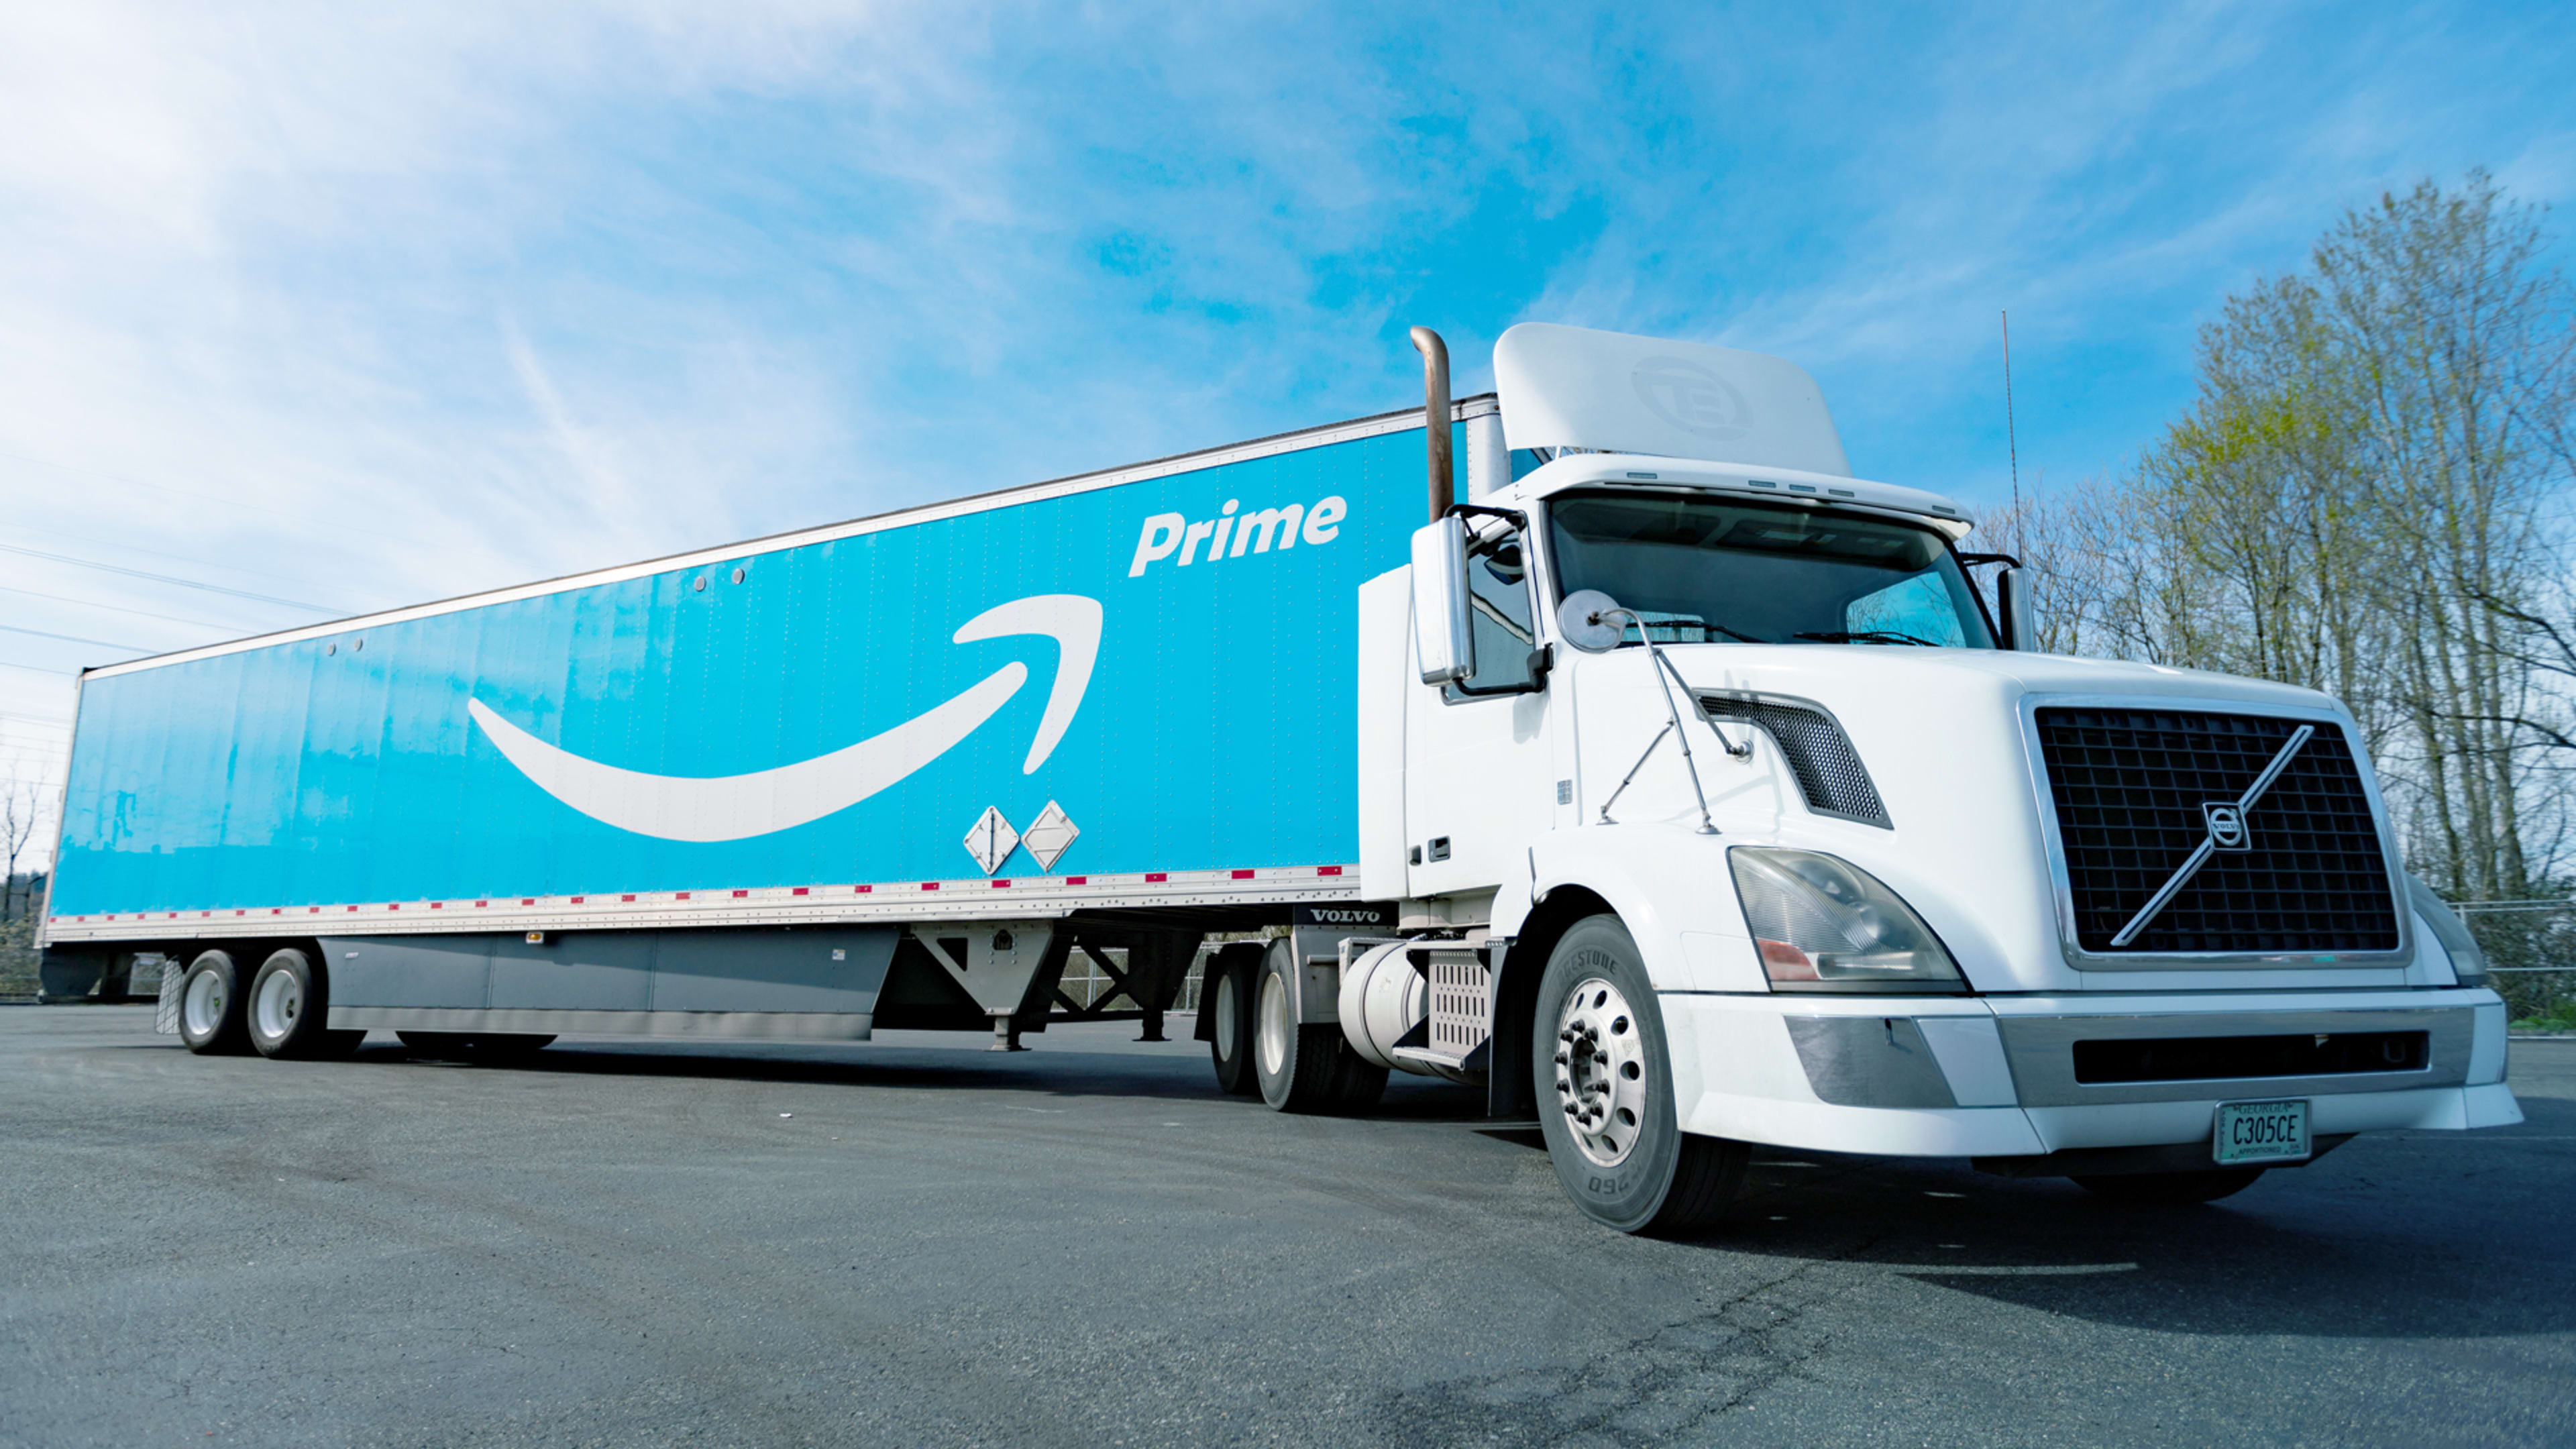 The best Amazon Prime Day 2018 deals so far